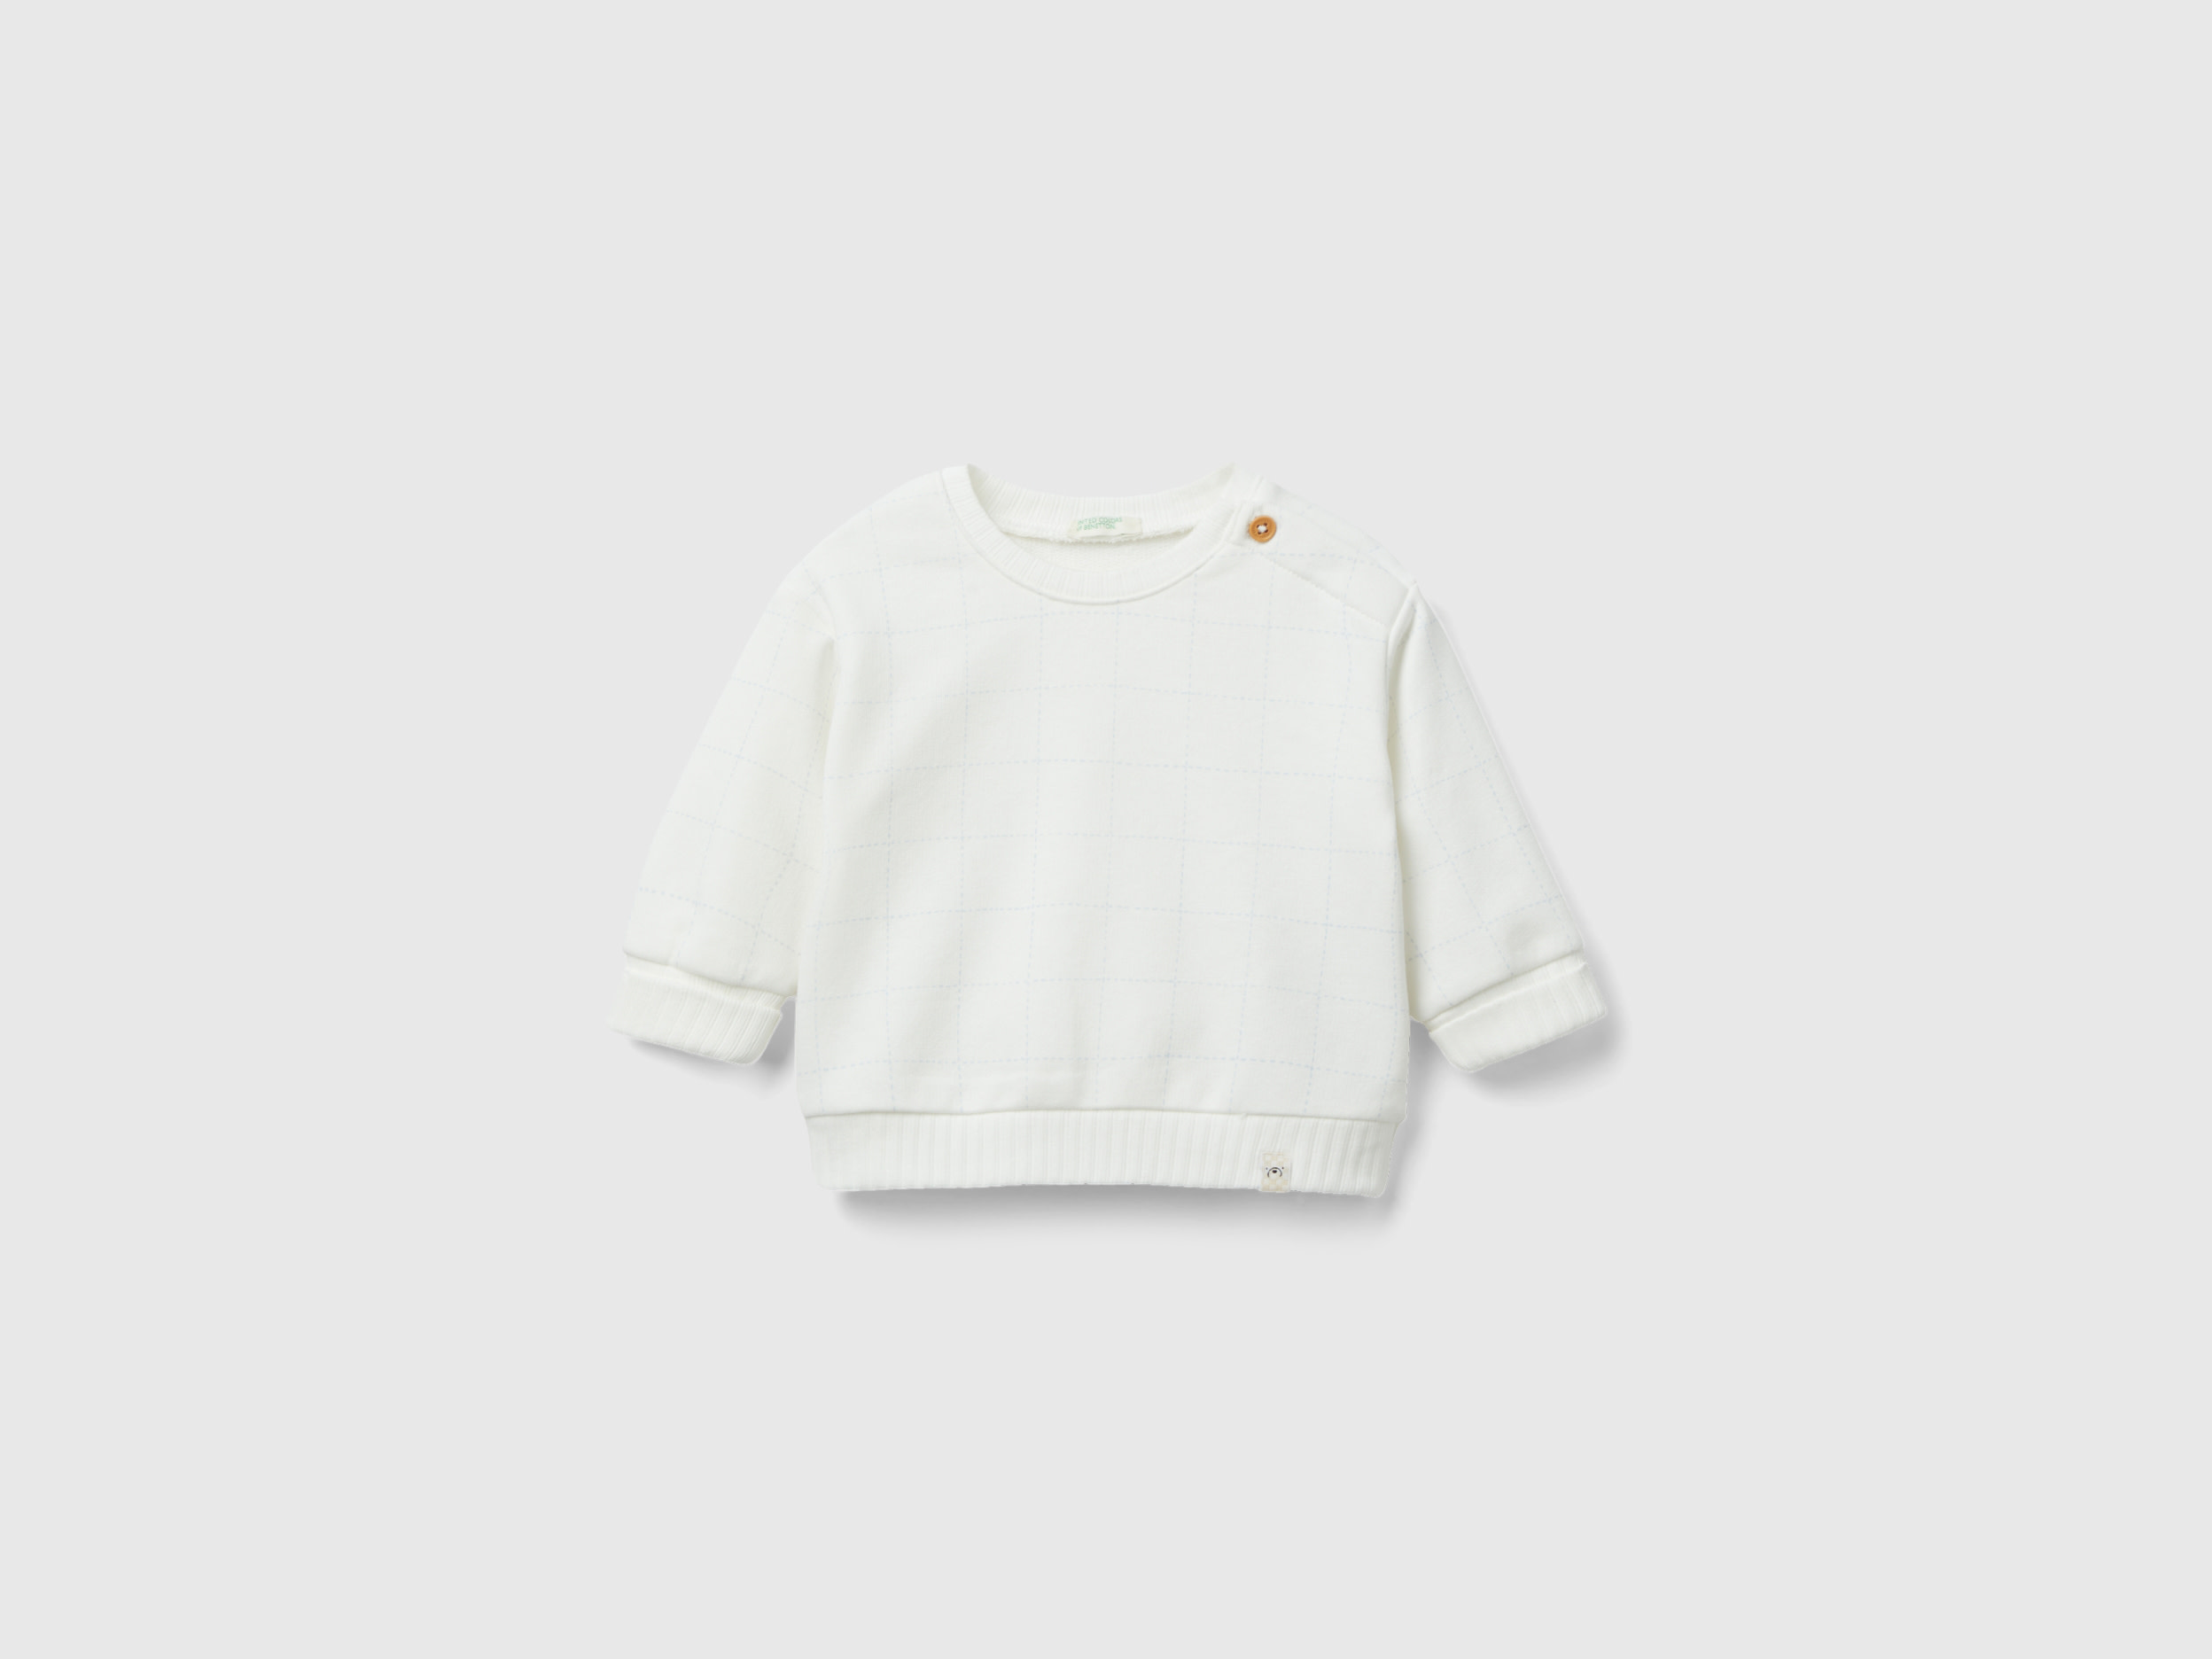 Benetton, Crew Neck Check Sweatshirt, size 0-1, Creamy White, Kids